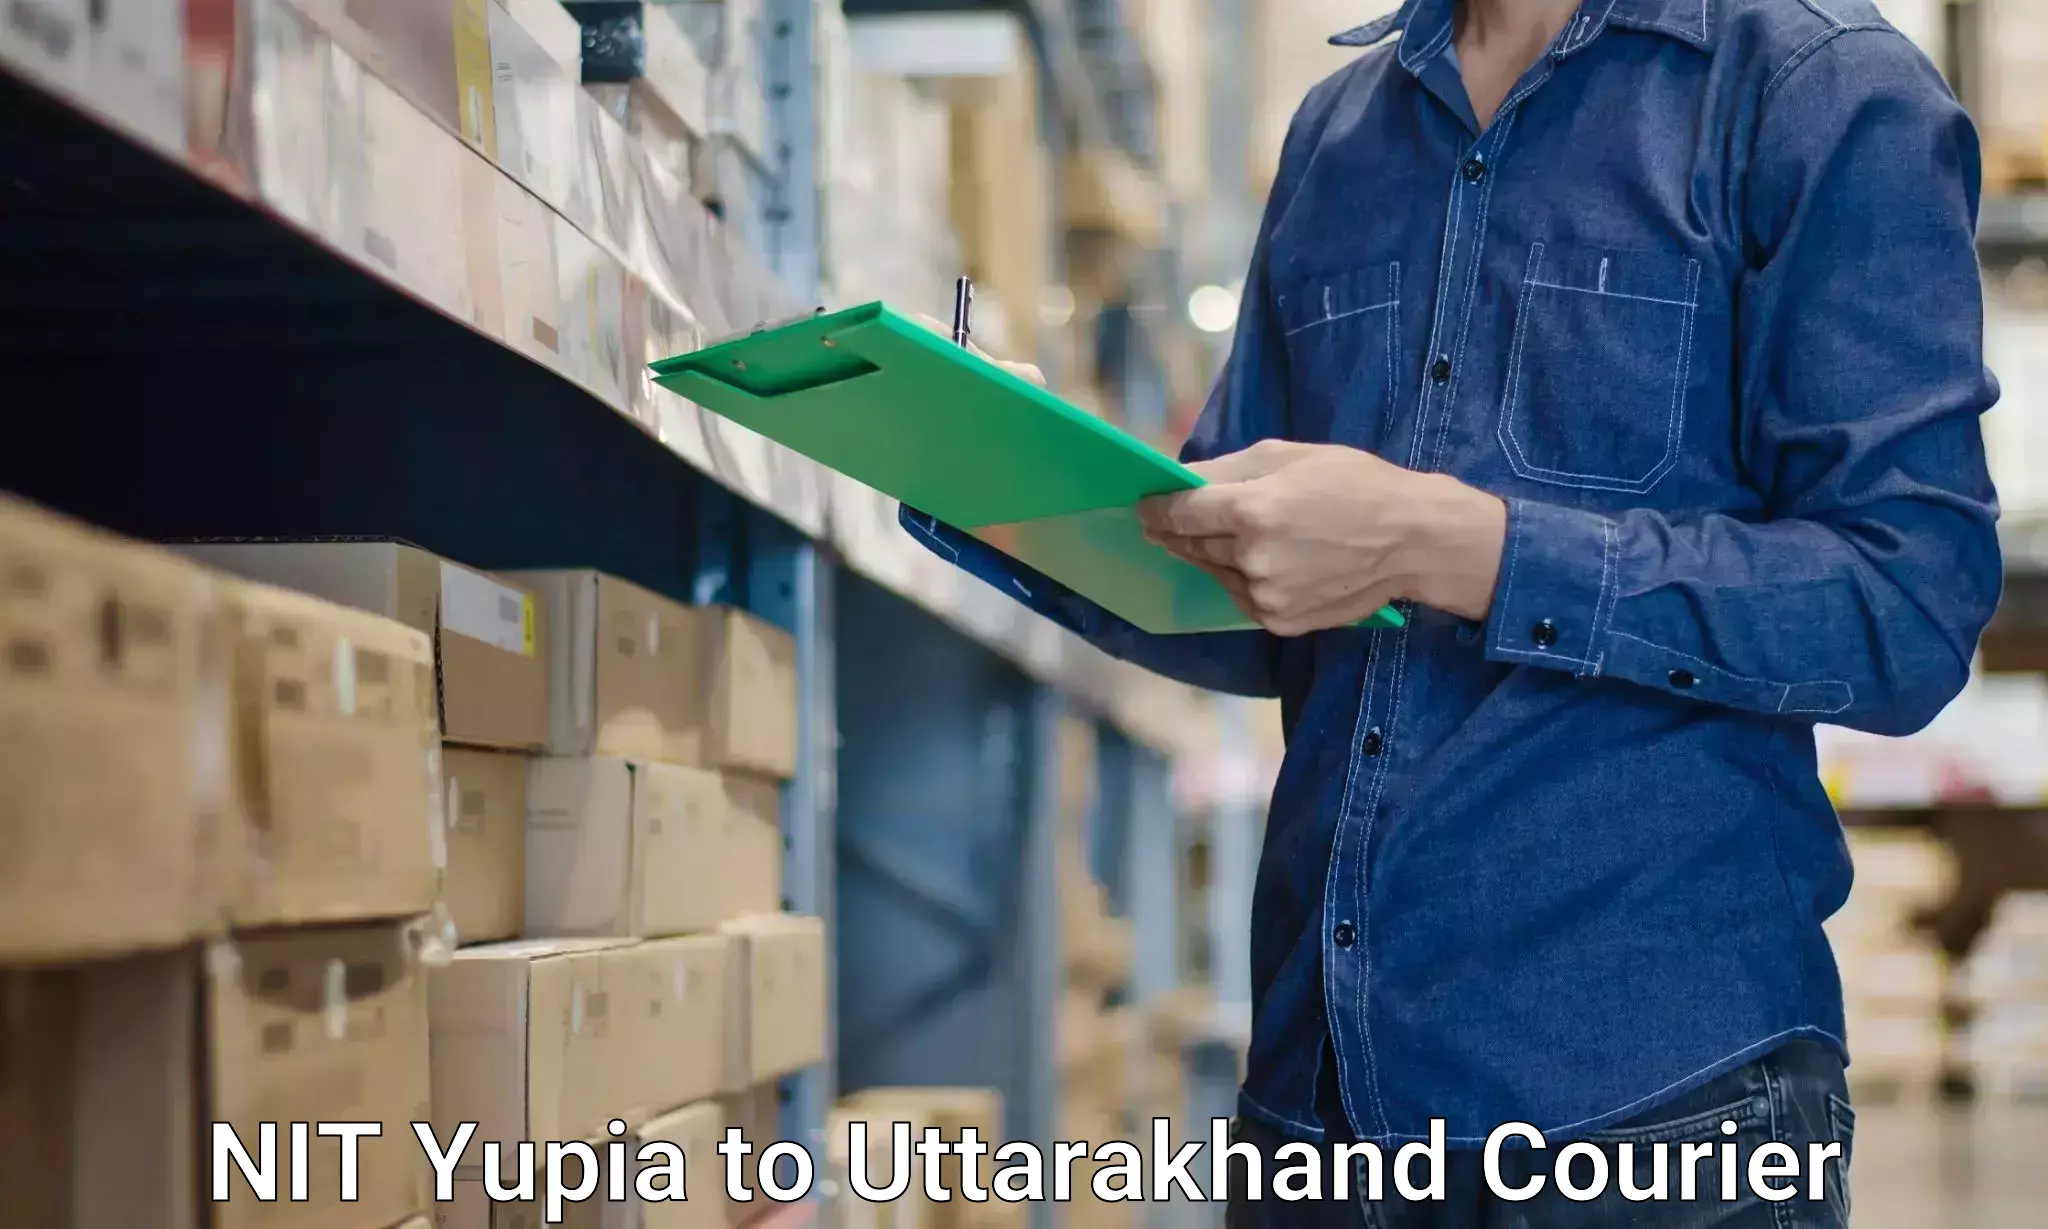 Home goods moving company NIT Yupia to Uttarakhand